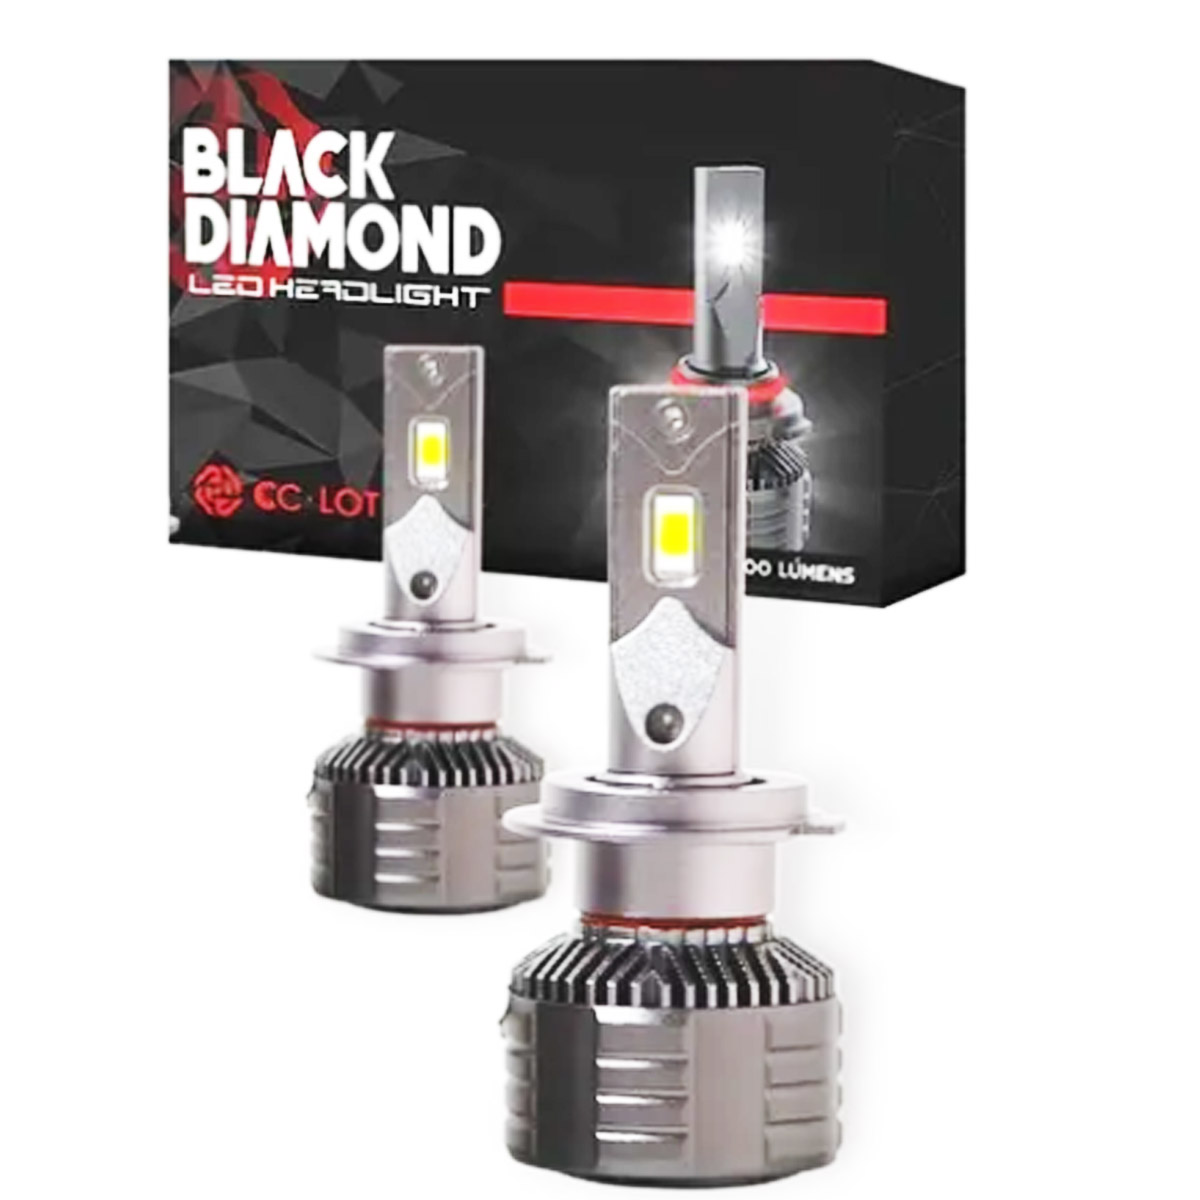 Par de Lâmpada Headlight Led CC-LOT Black Diamond H4 9000 Lúmens JR8